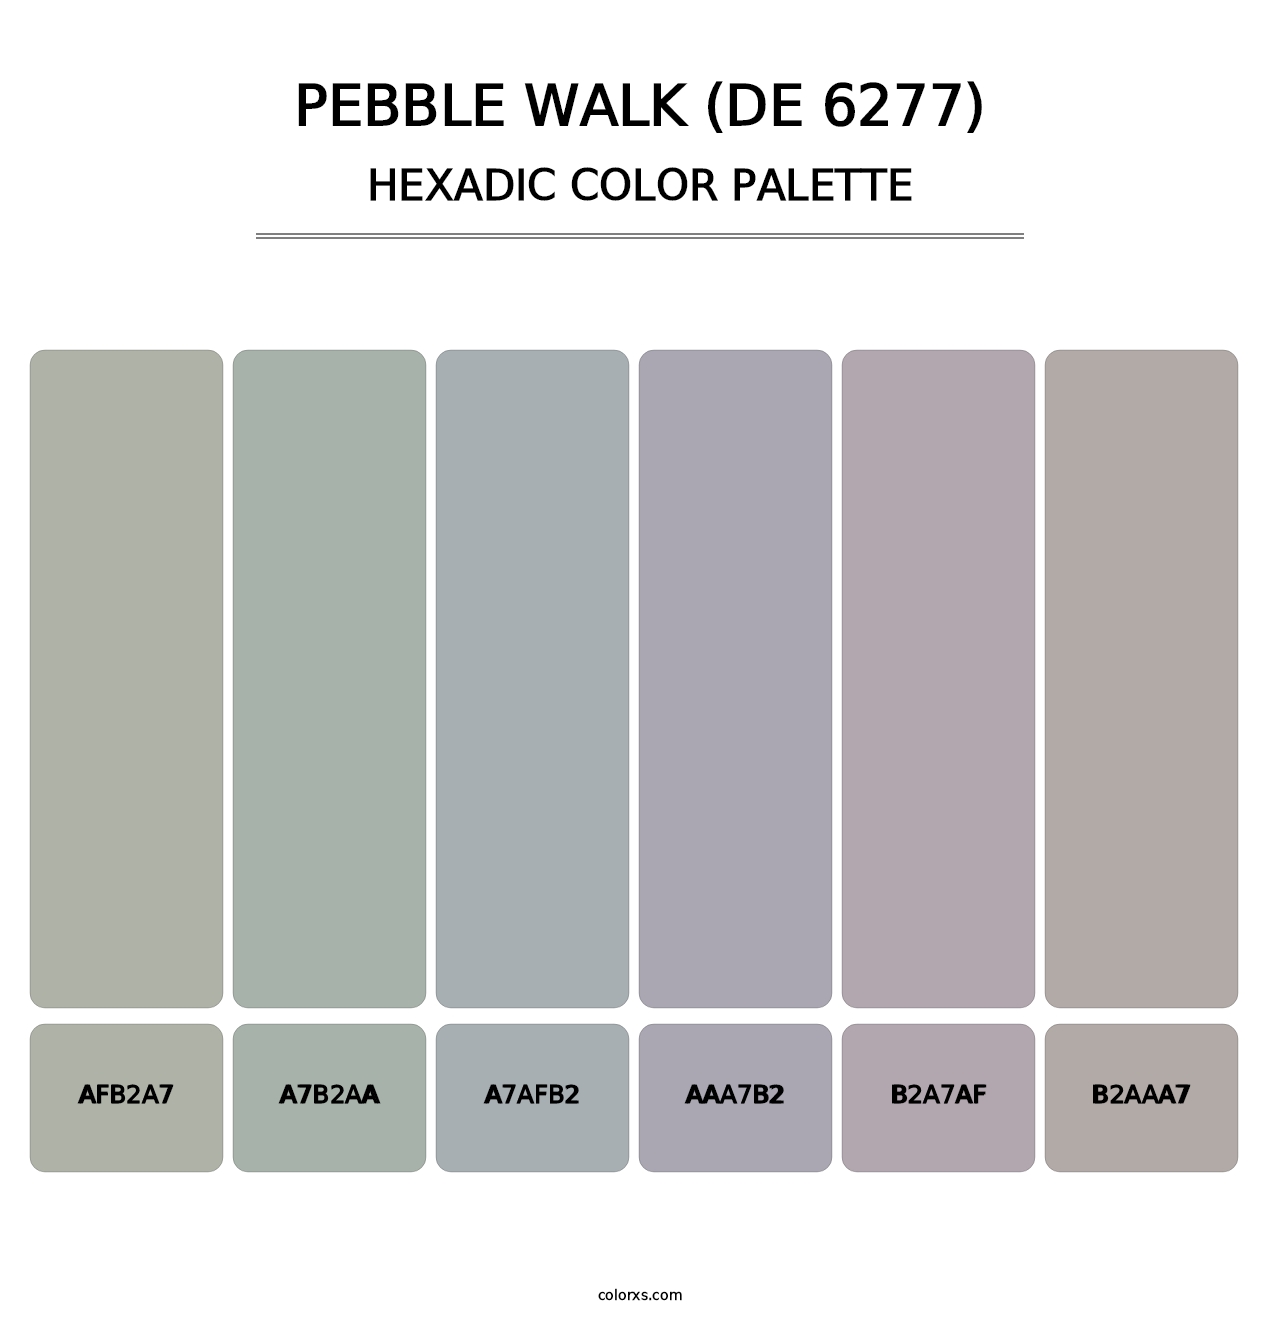 Pebble Walk (DE 6277) - Hexadic Color Palette